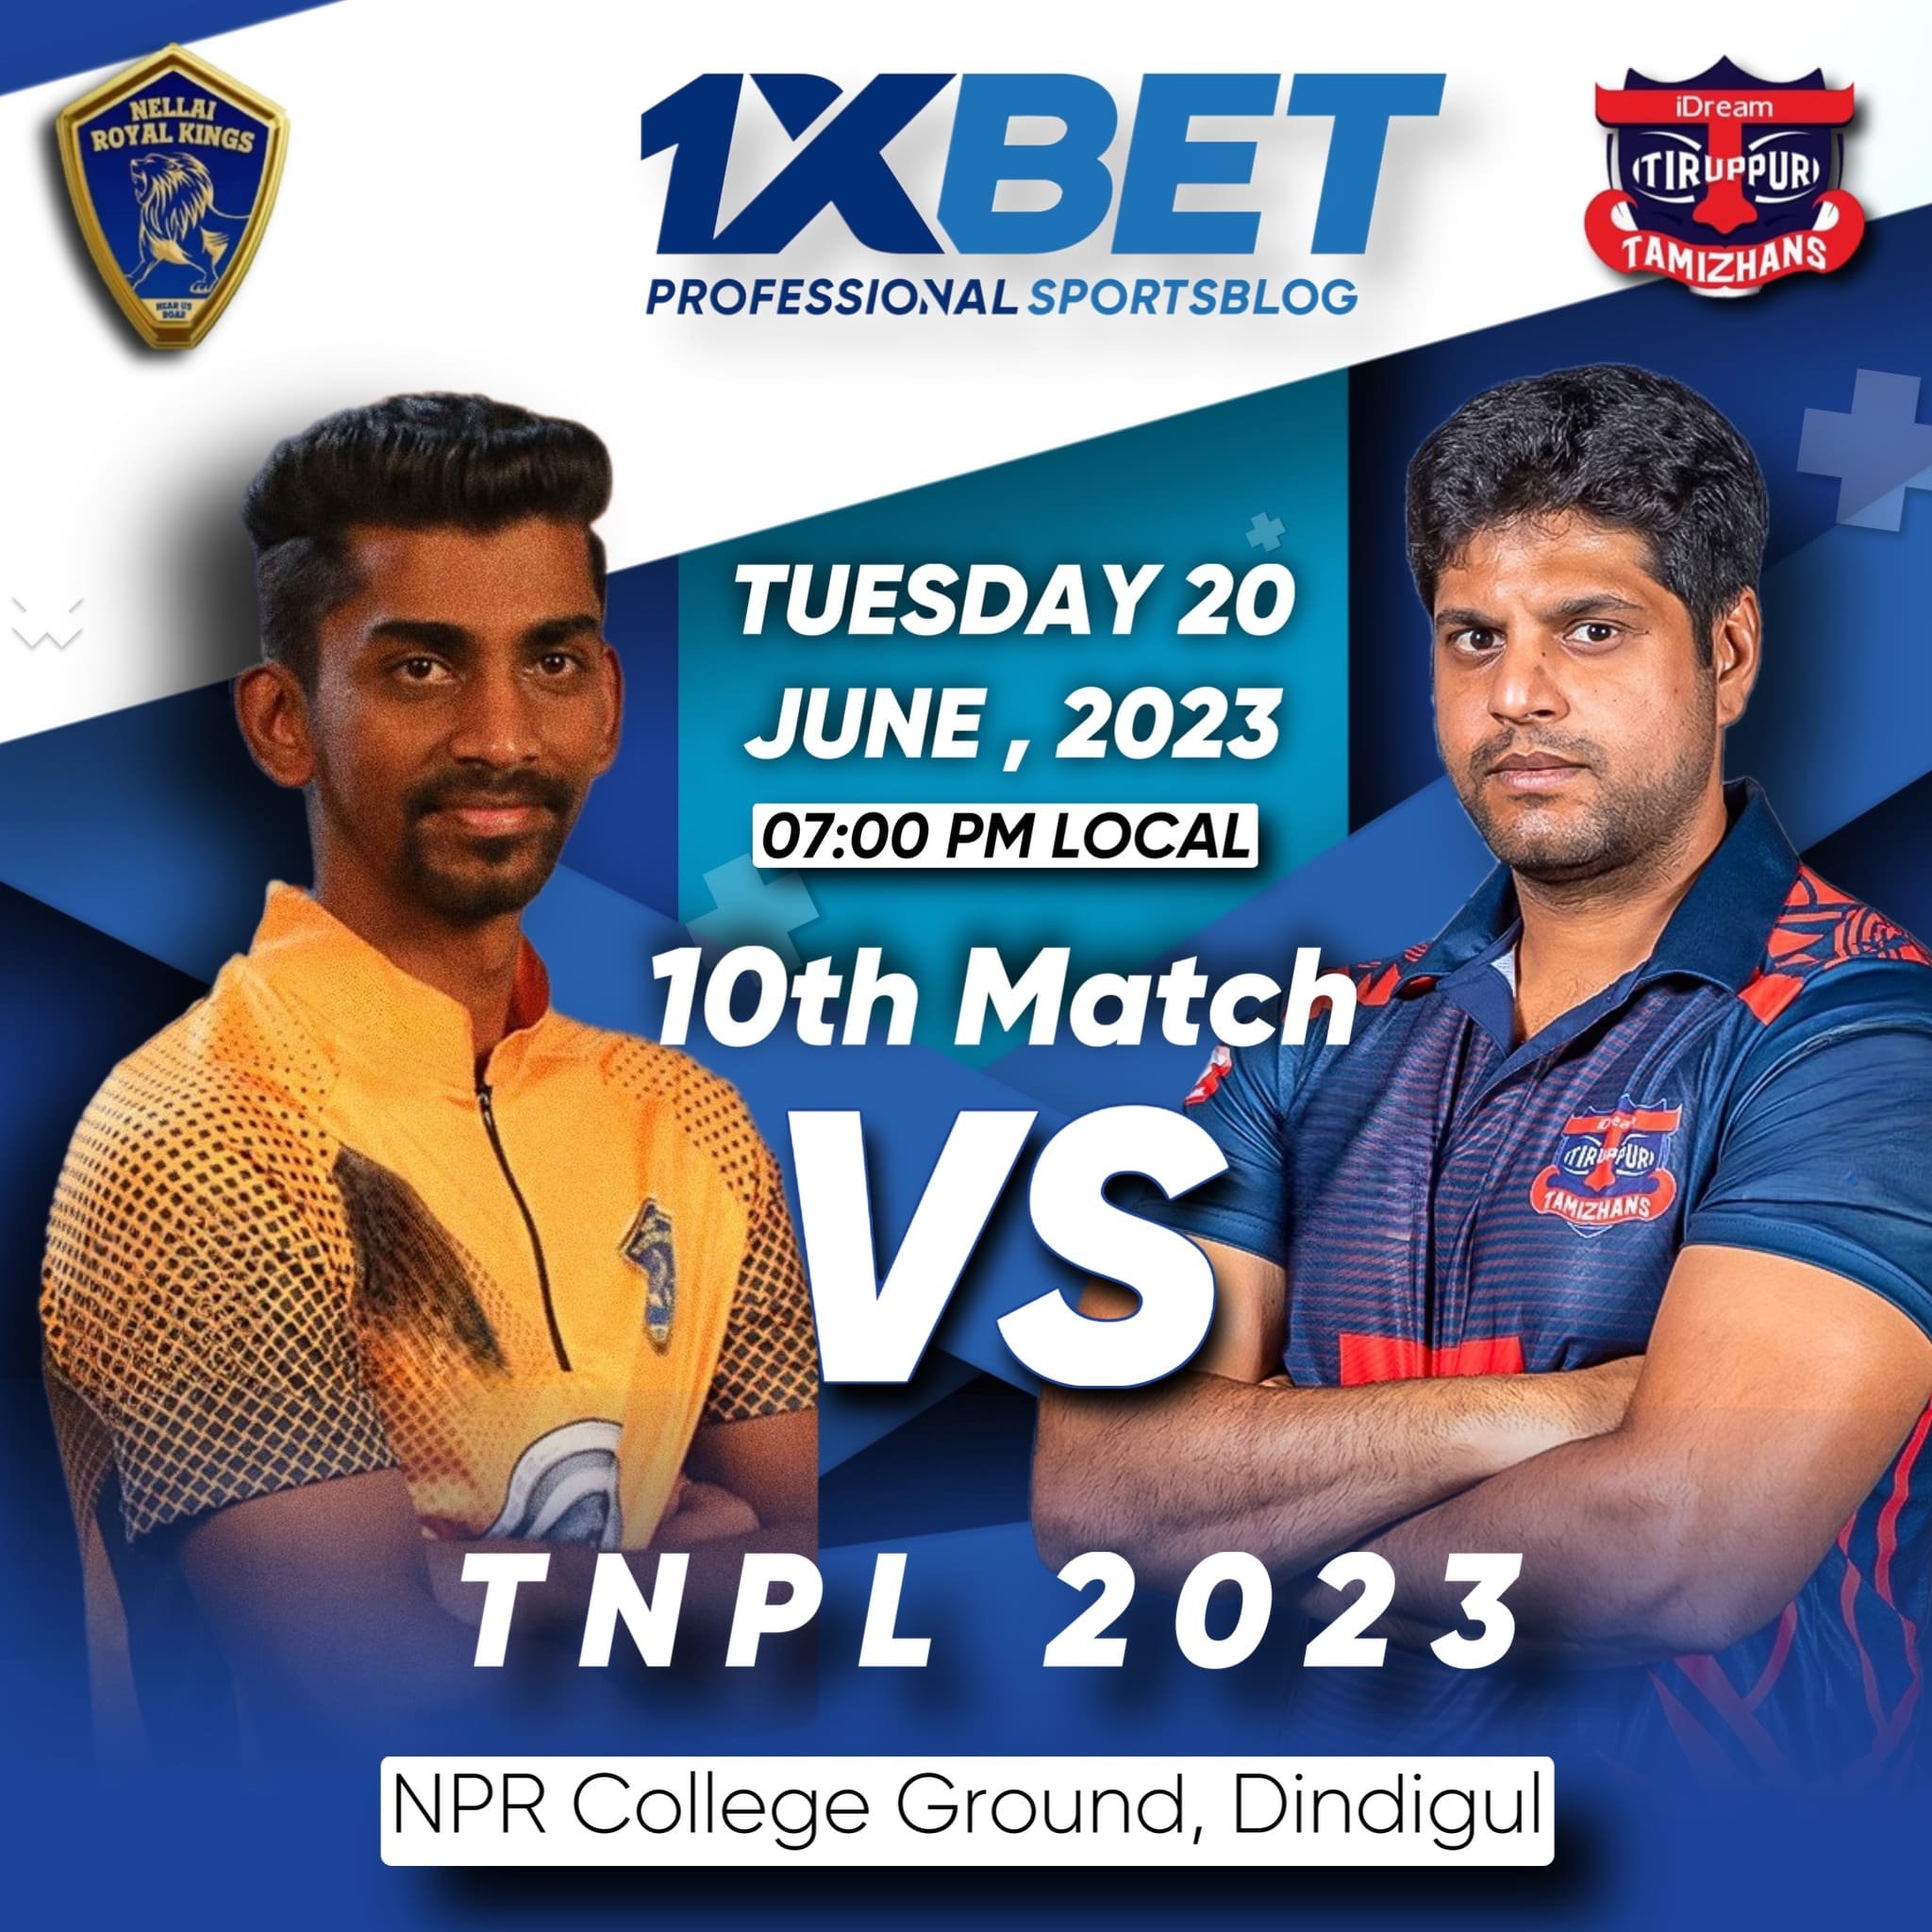 IDream Tiruppur Tamizhans vs Nellai Royal Kings, TNPL 2023, 10th Match Analysis